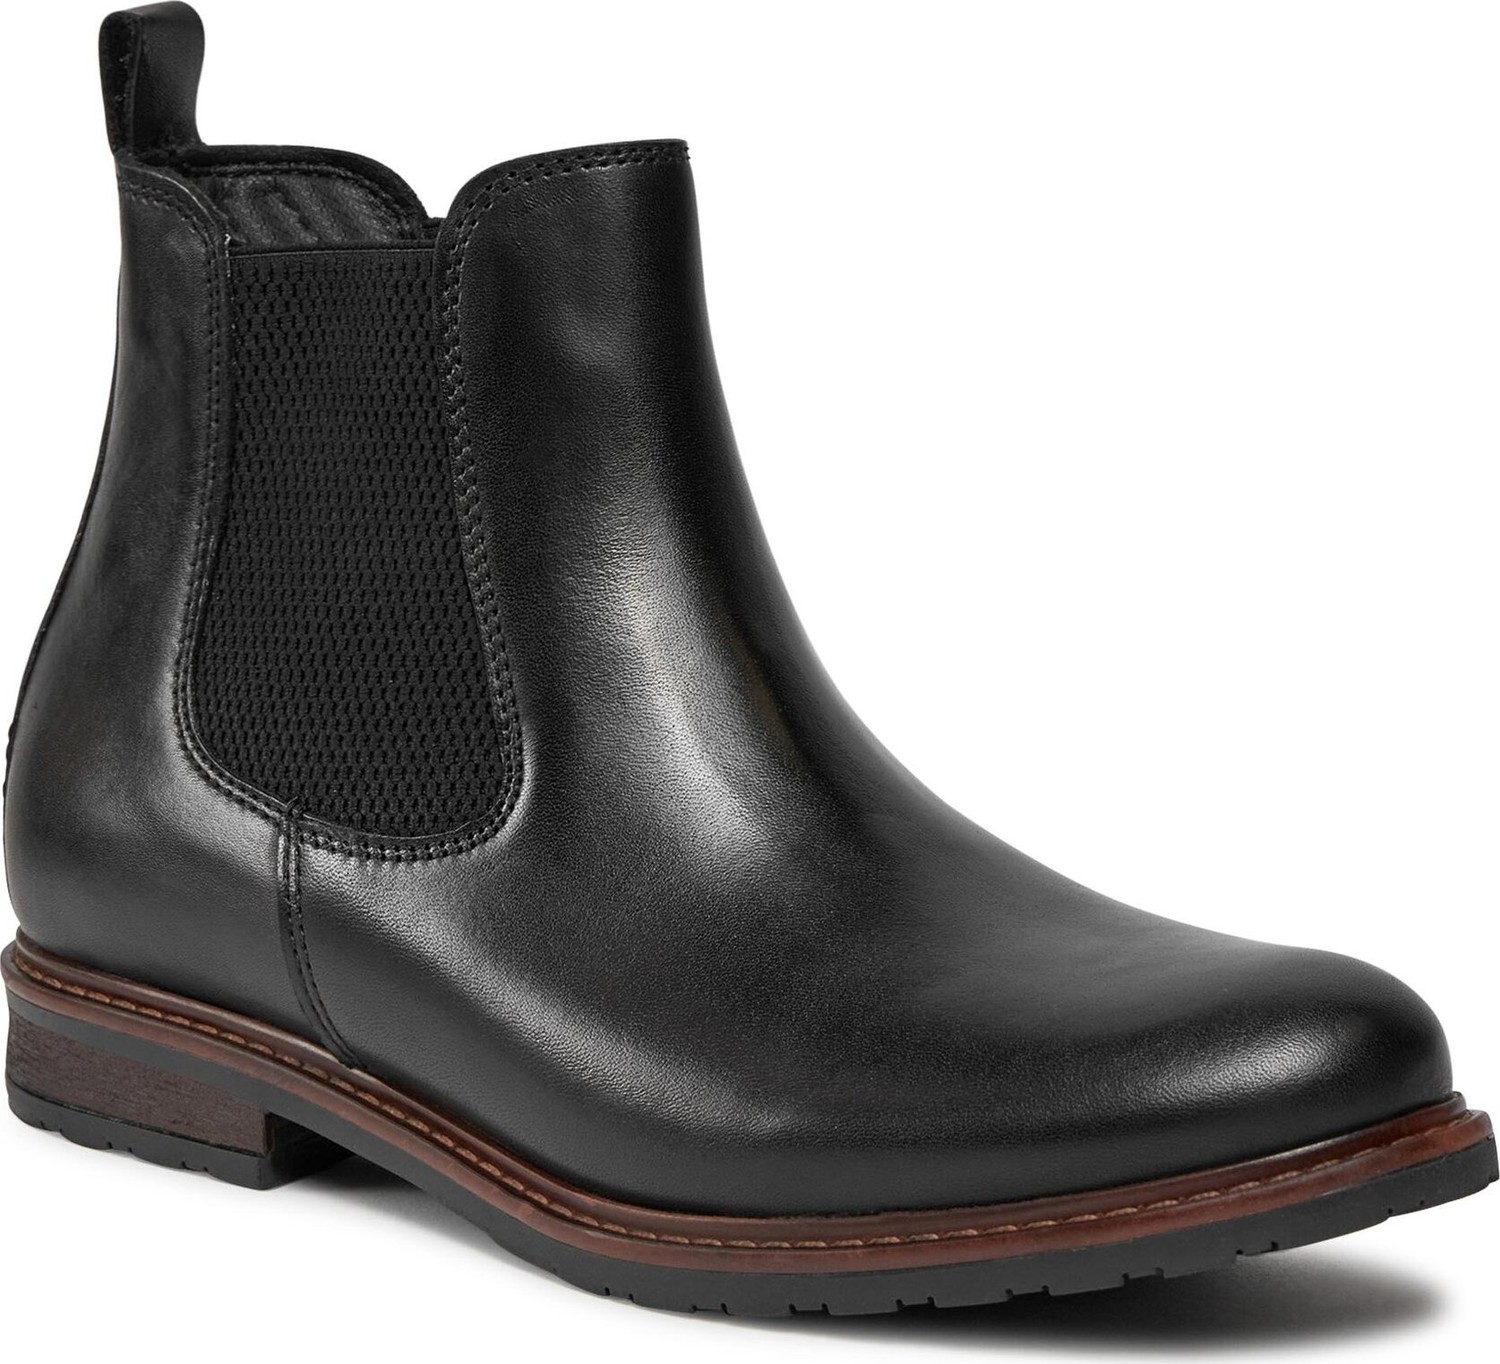 Kotníková obuv s elastickým prvkem Tamaris 1-25056-41 Black Leather 003